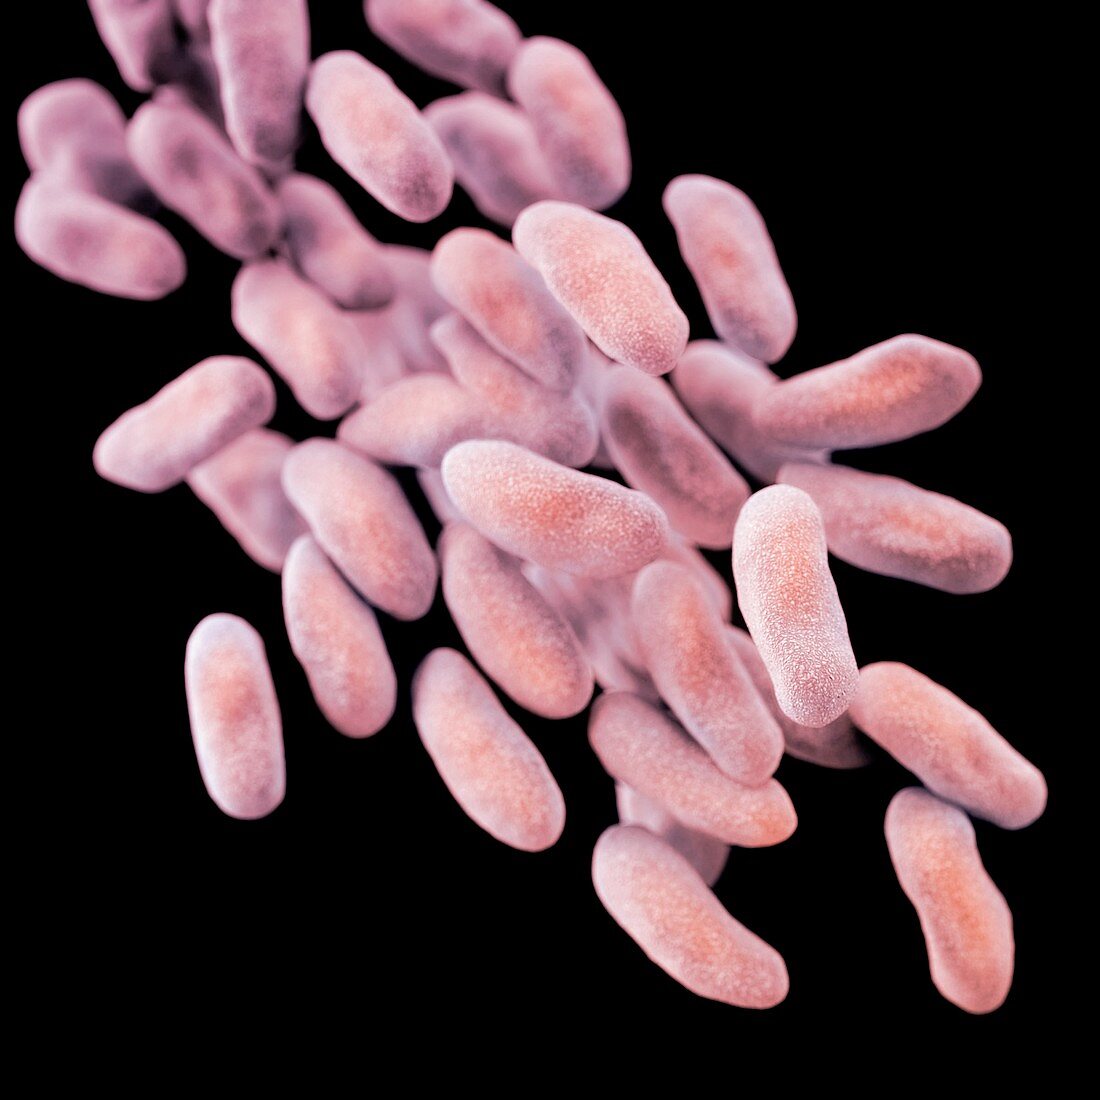 Drug-resistant Enterobacteria bacteria